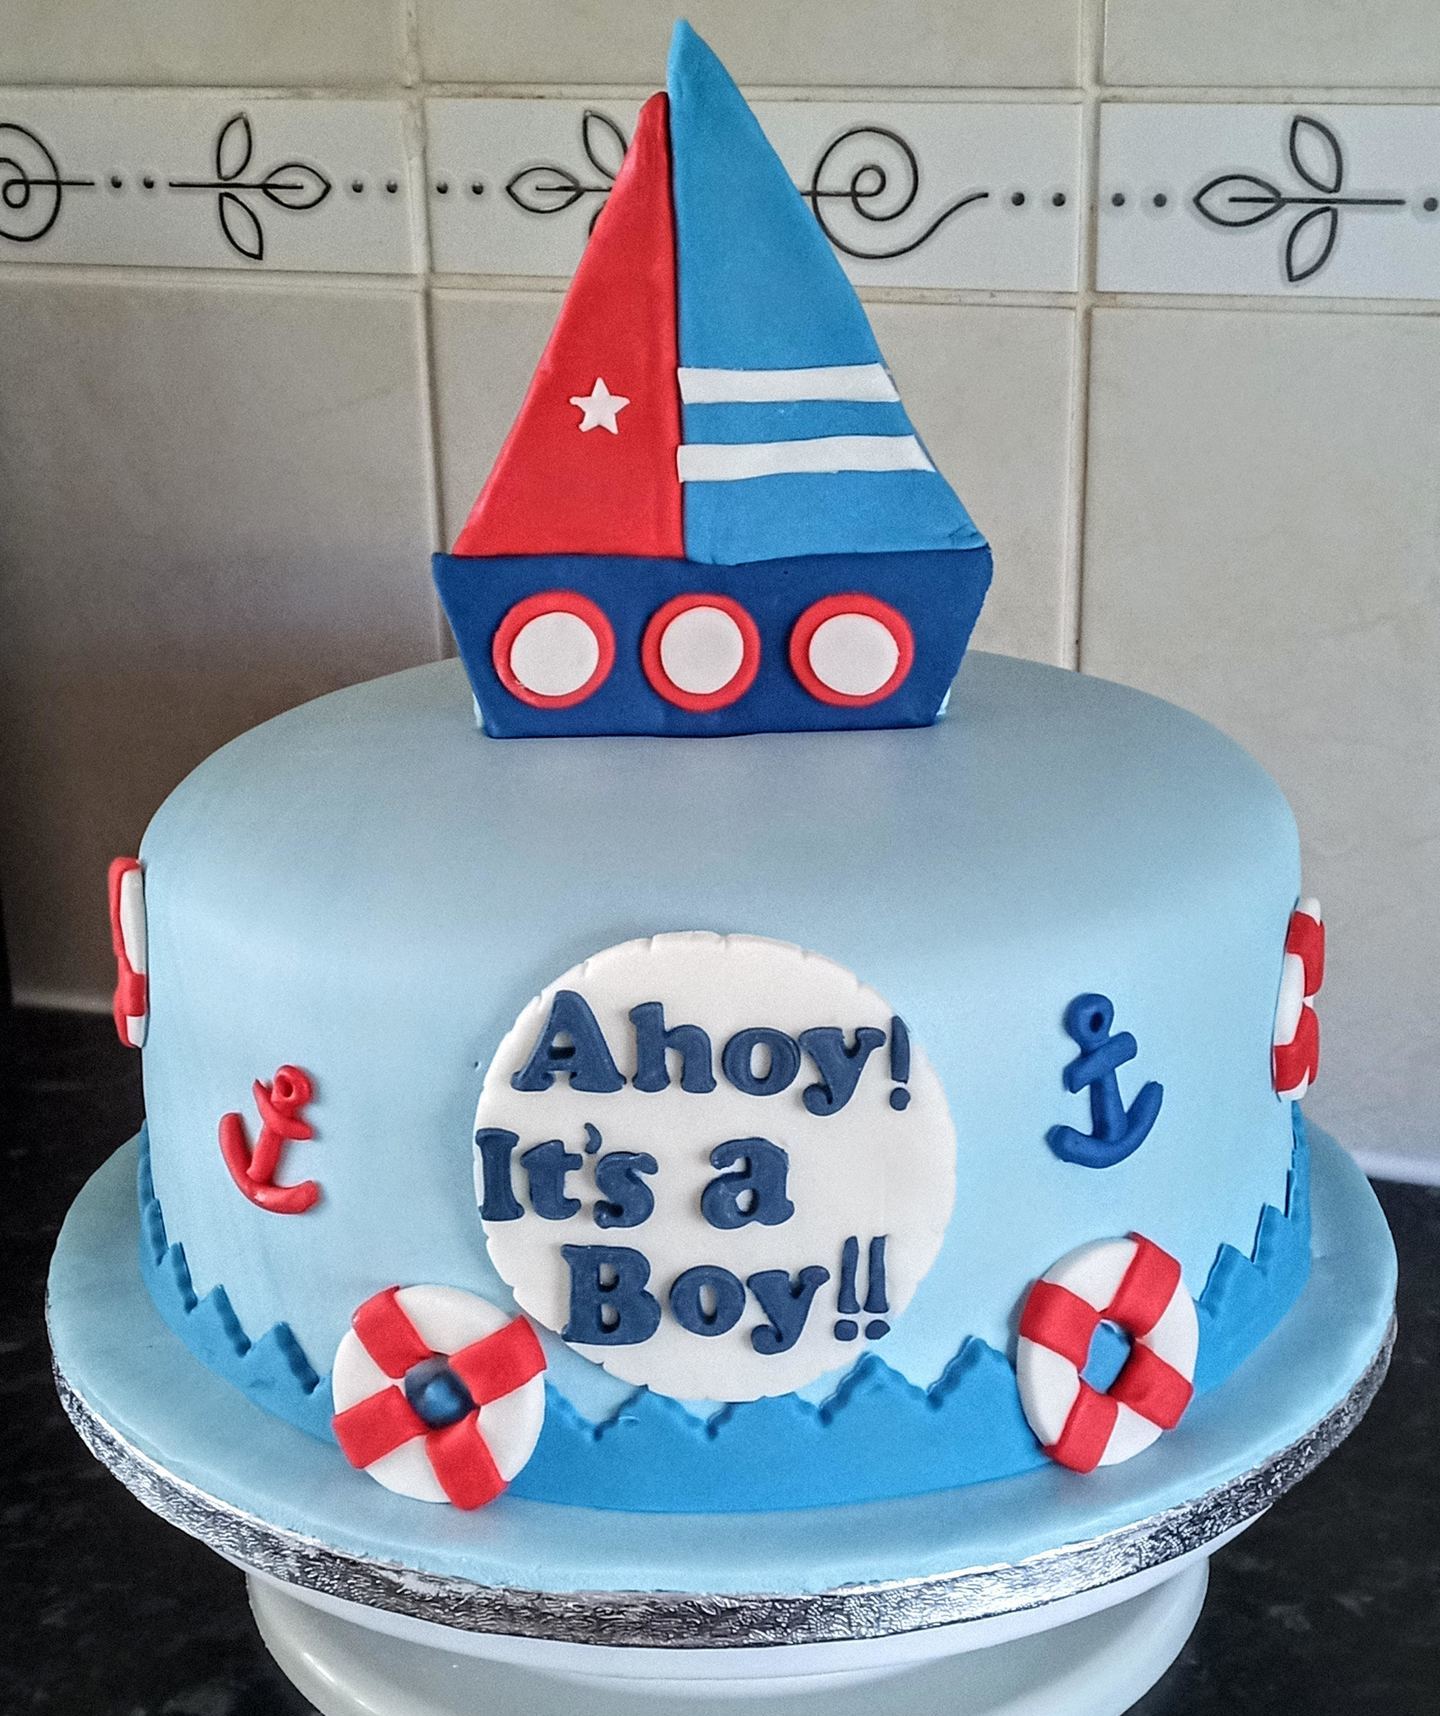 "Ahoy, its a boy" babyshower cake